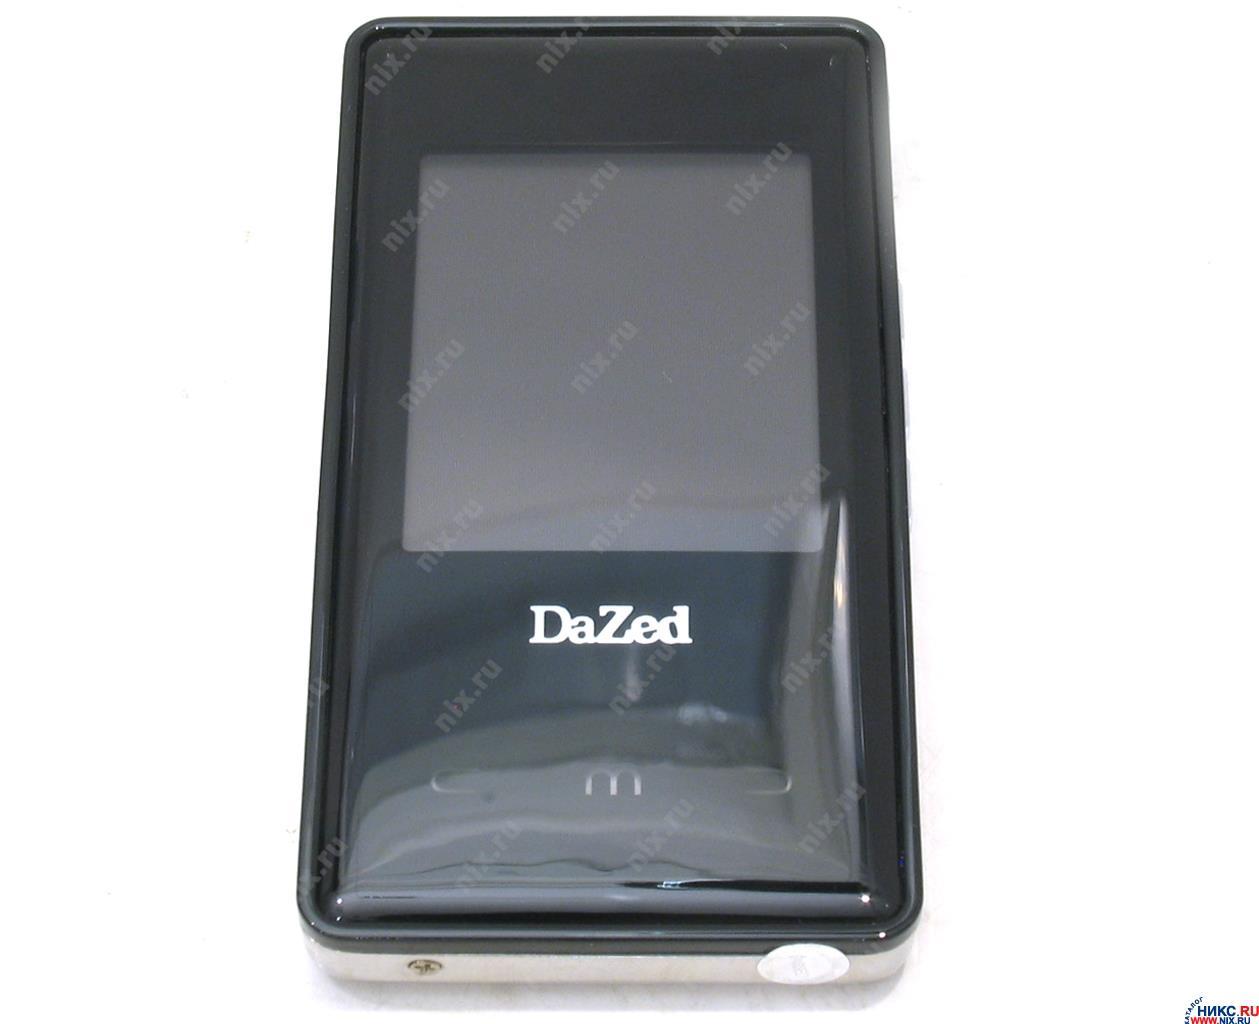 DaZed V-65-2Gb Black (MP3/WMA/WAV/ASF/JPG Player, Flash drive, FM Tuner,2Gb,.,1.8